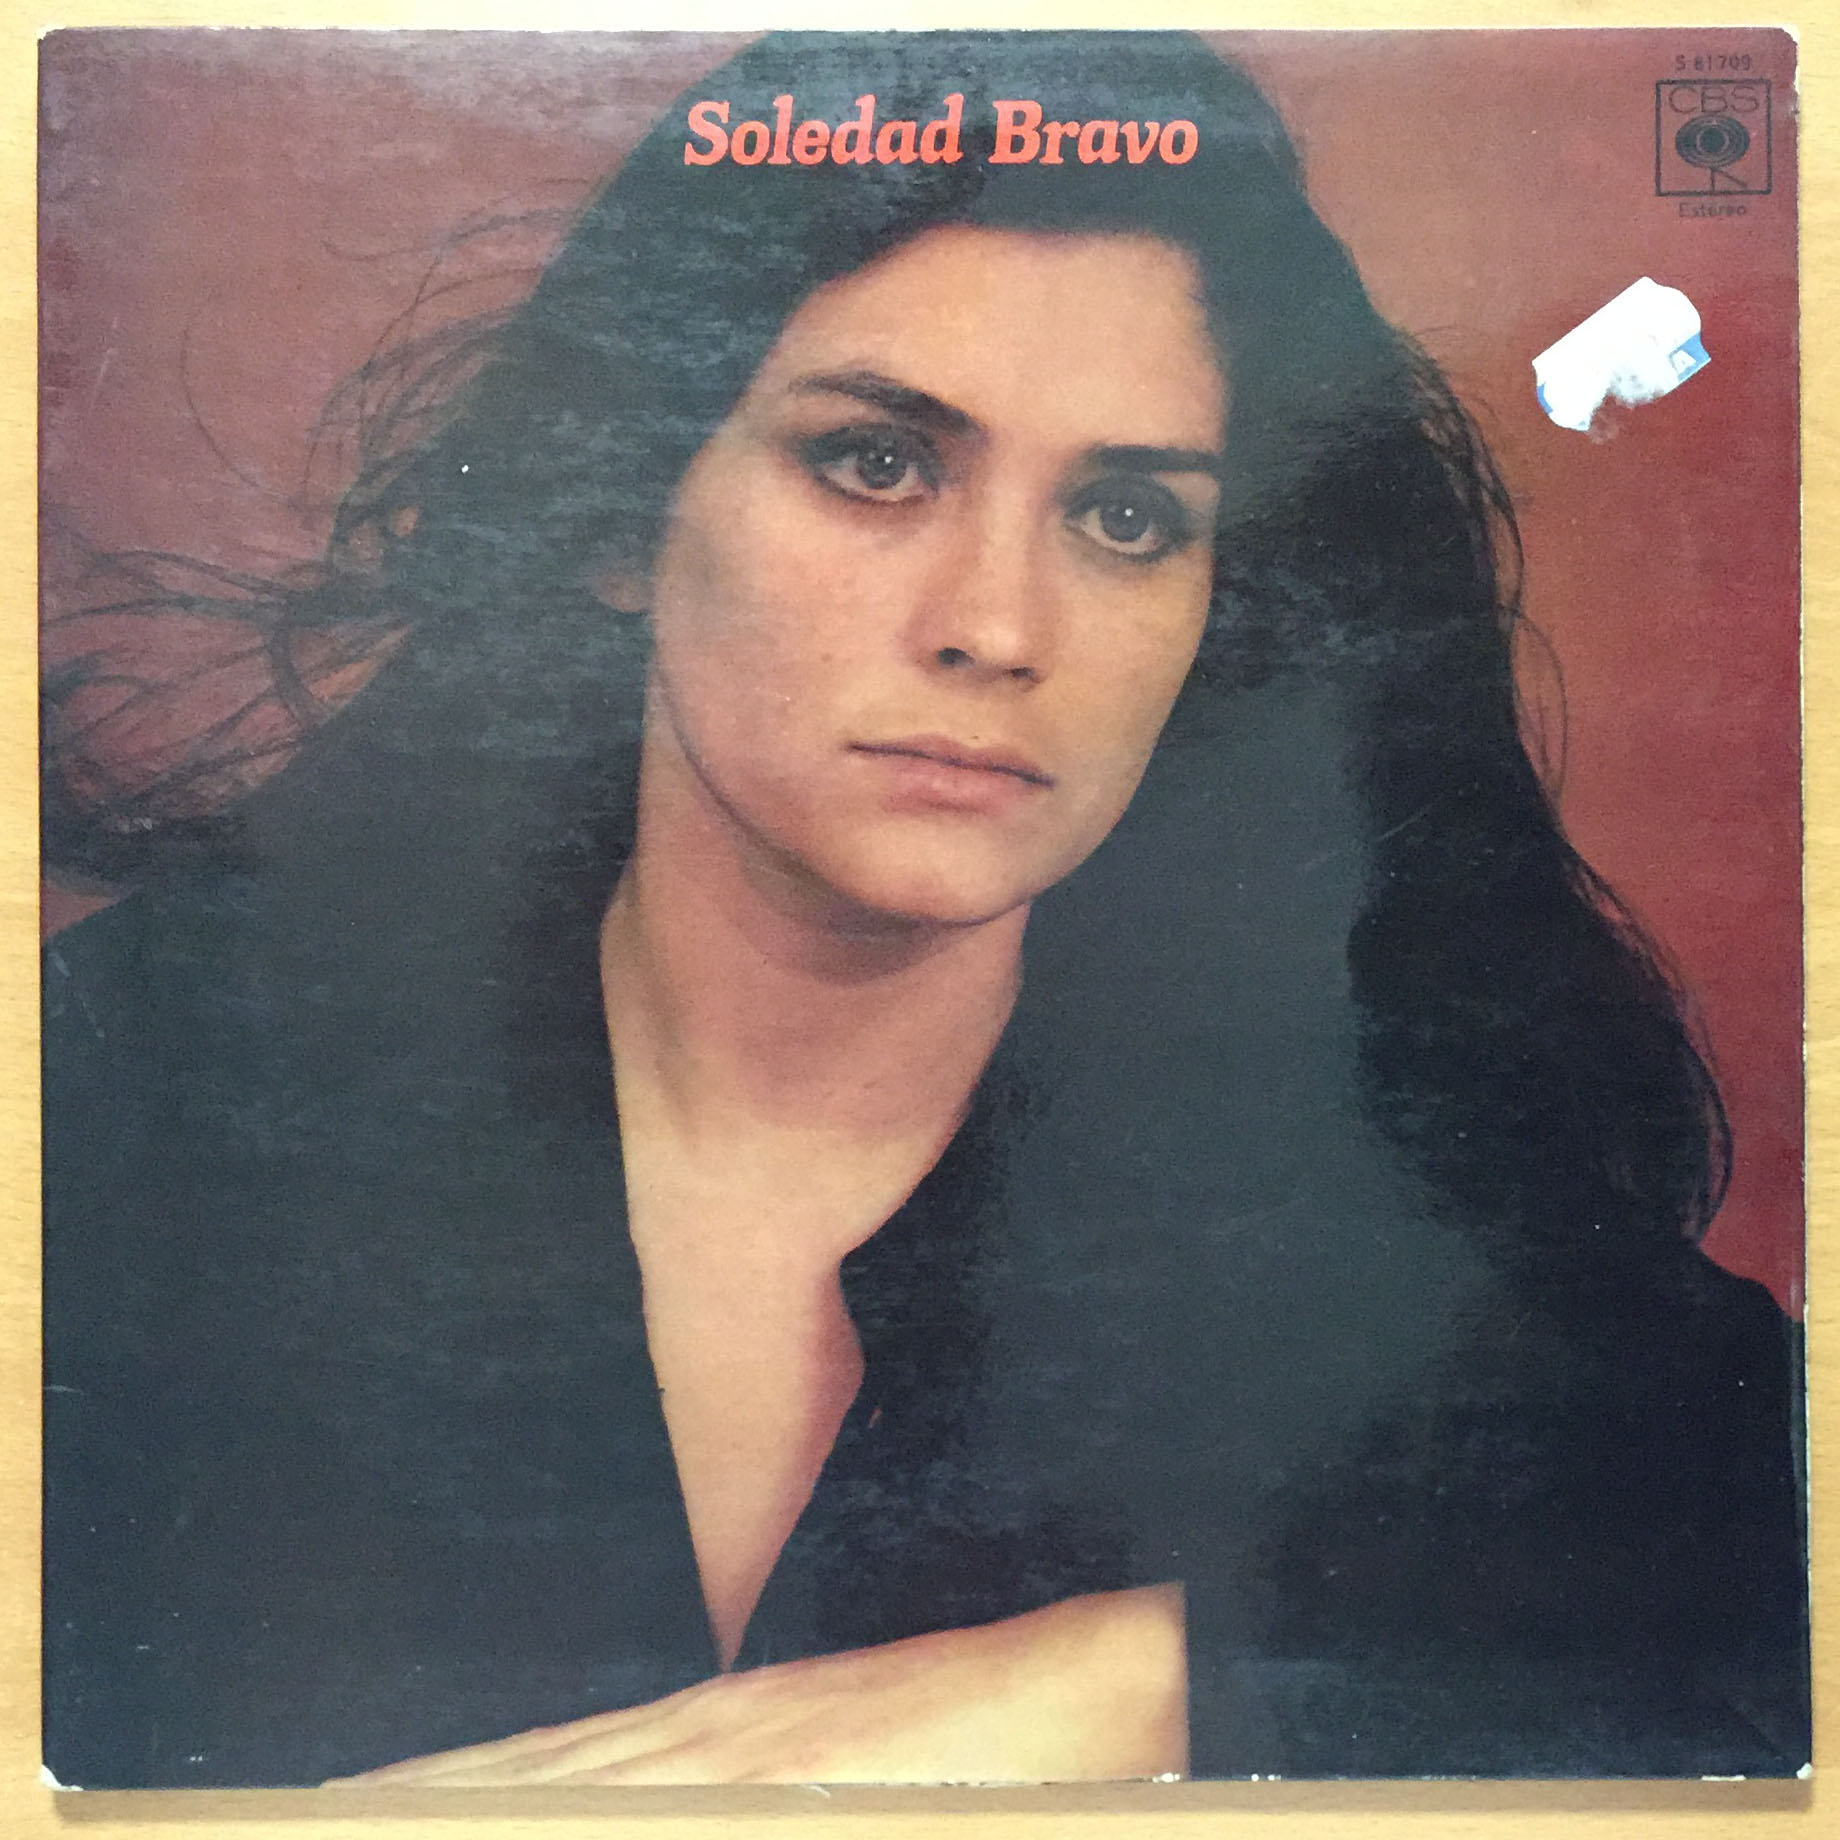 Soledad Bravo-La vida no vale nada. 1976 CBS